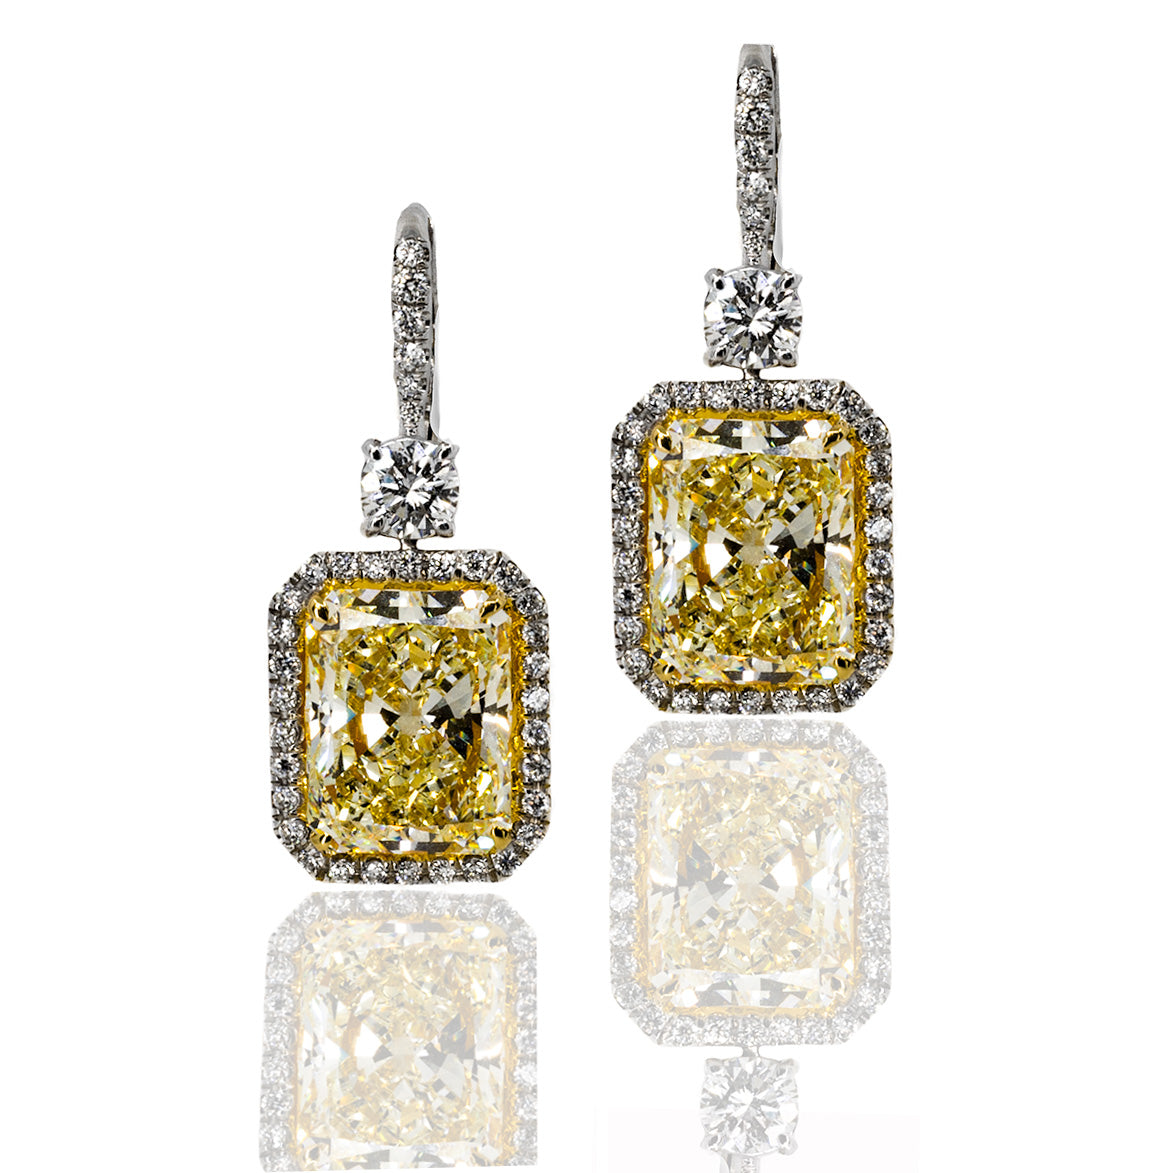 10.36 Carat Yellow Diamond Earrings